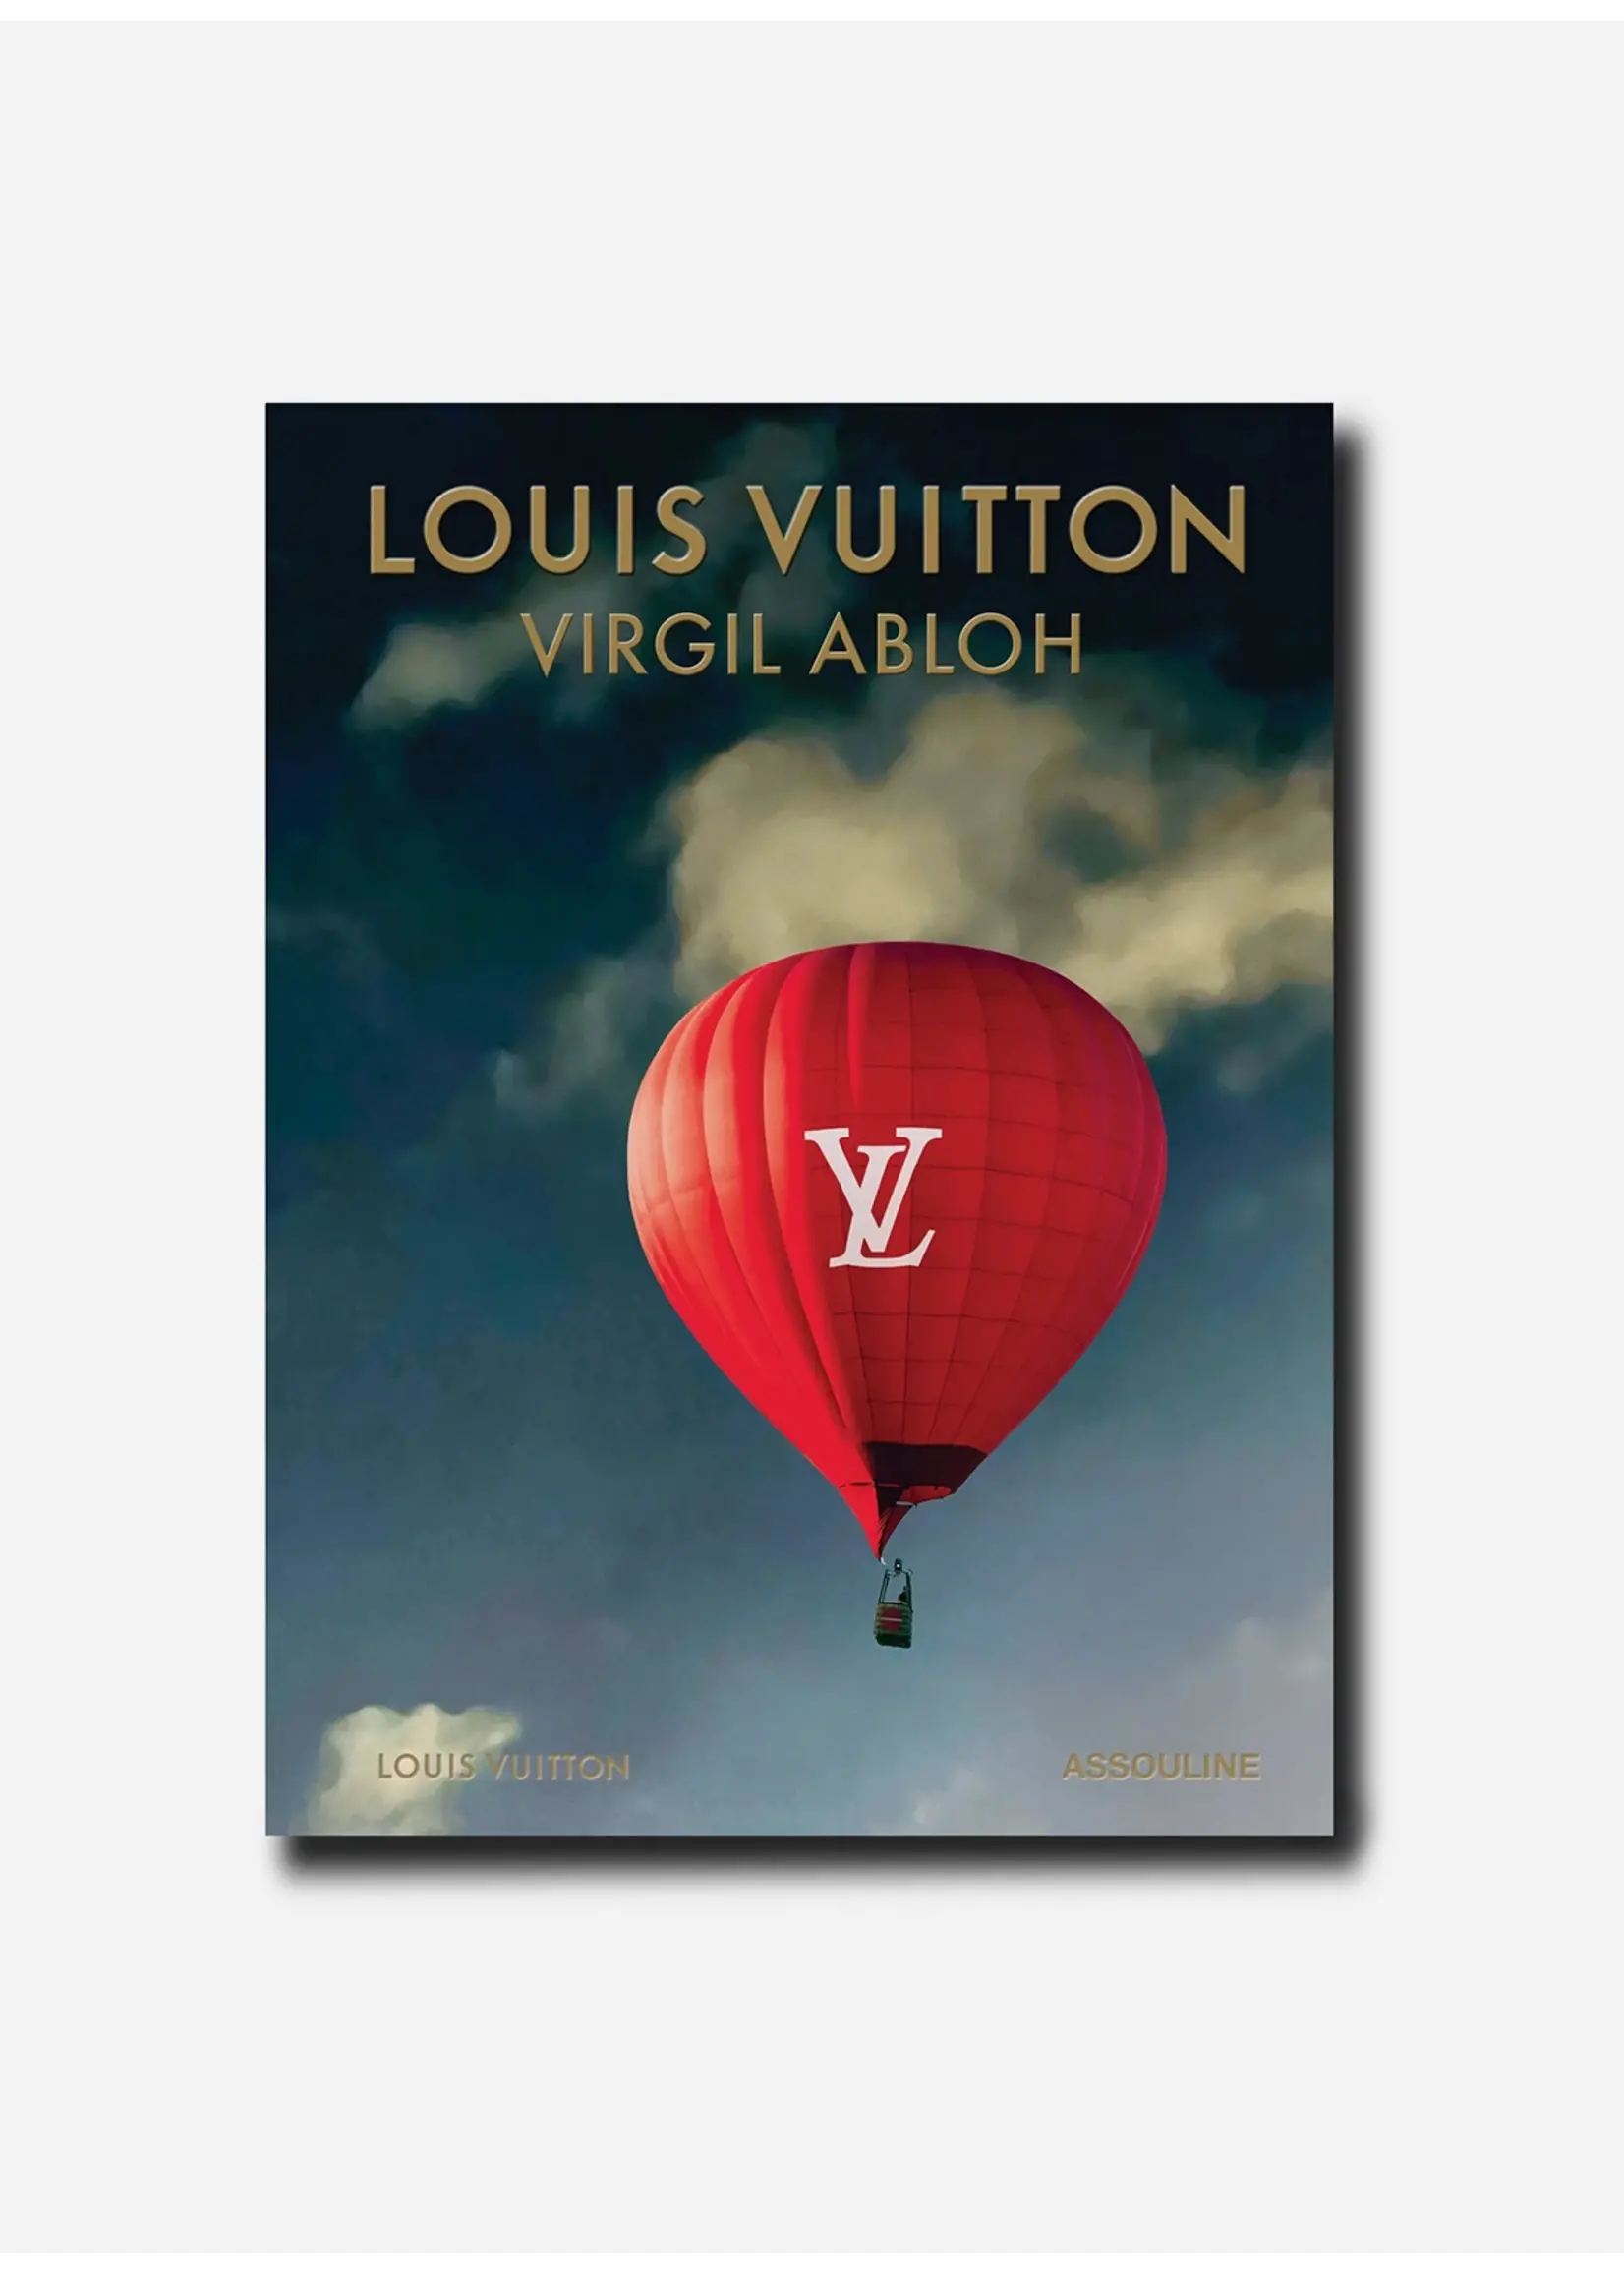 Assouline Books Louis Vuitton Virgil Abloh Balloon Cover